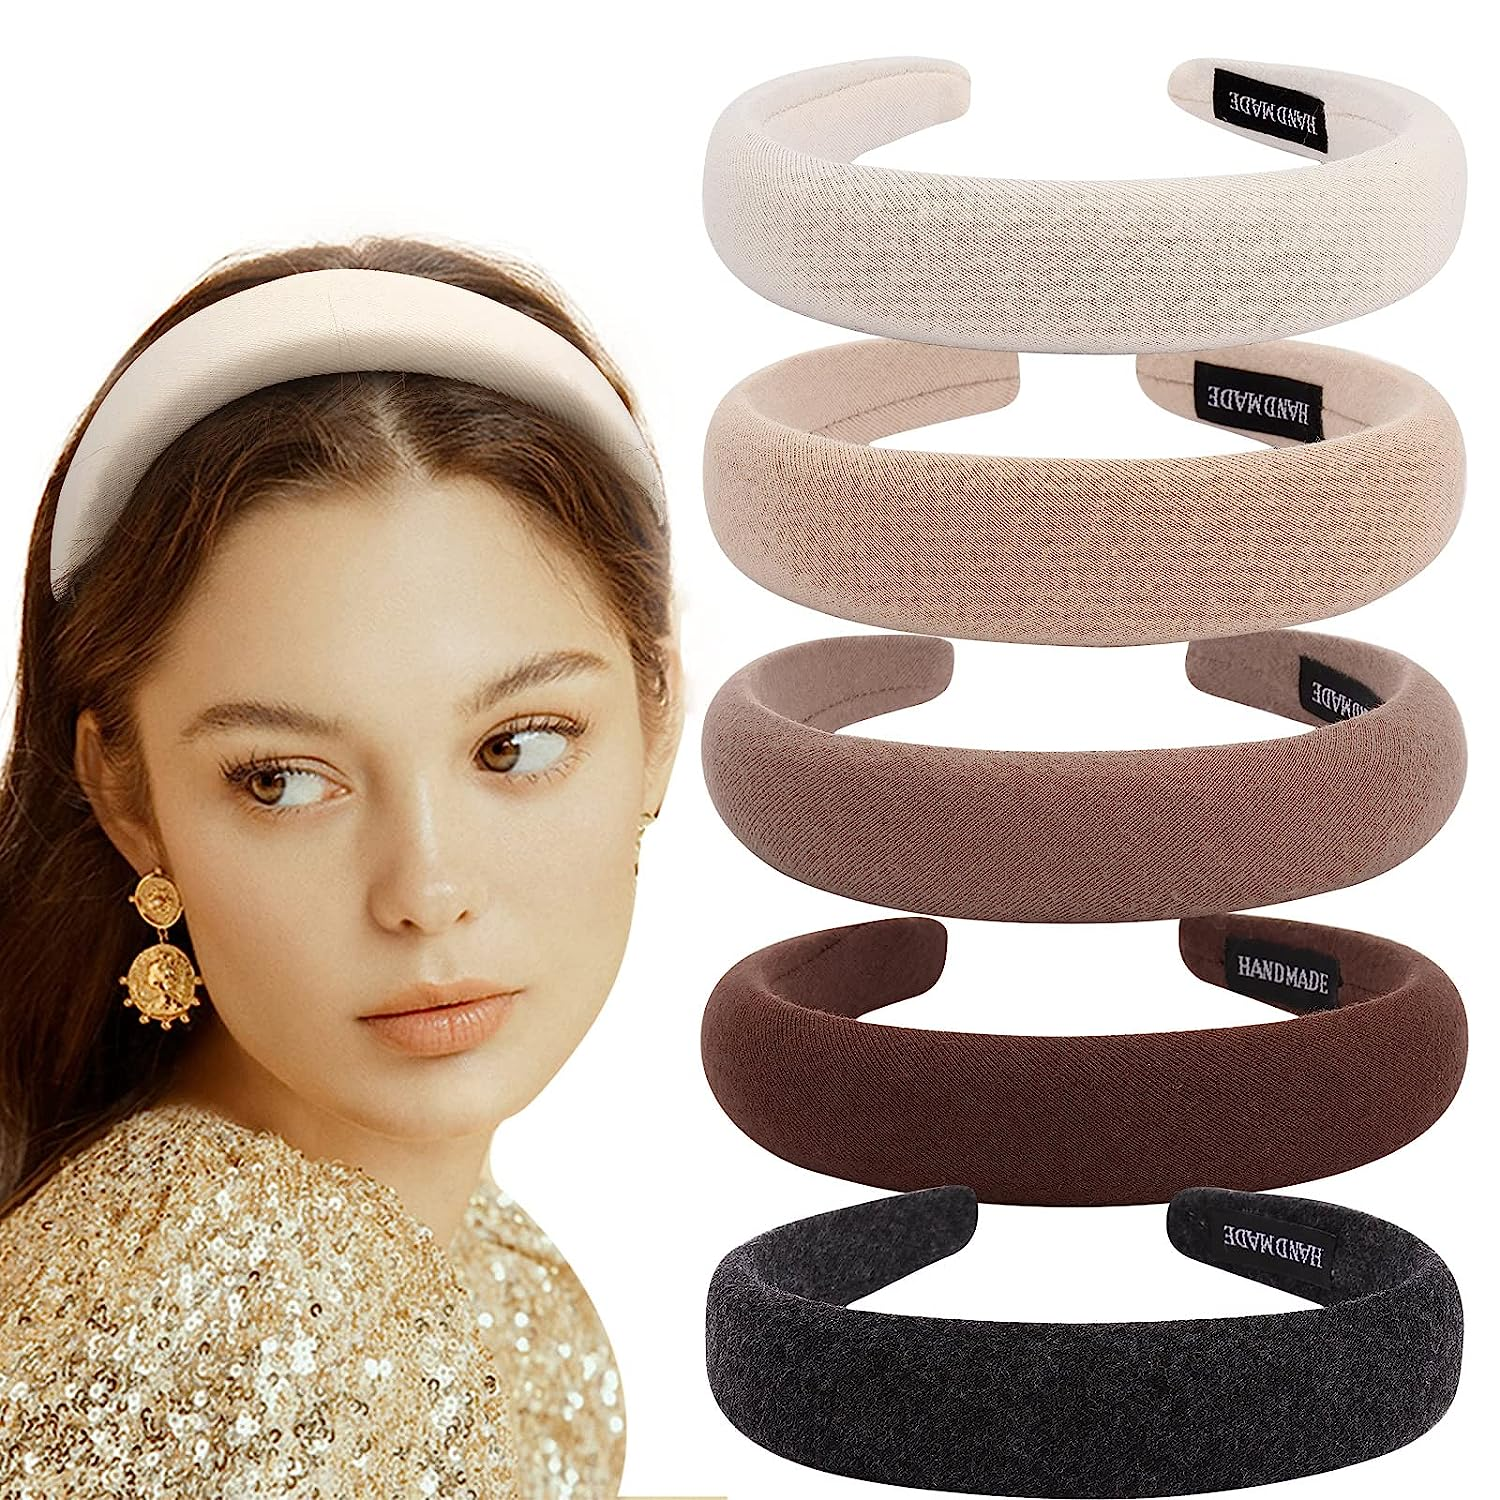  Fashion Headbands for Girls Women Padded Fabric Hair Bands 